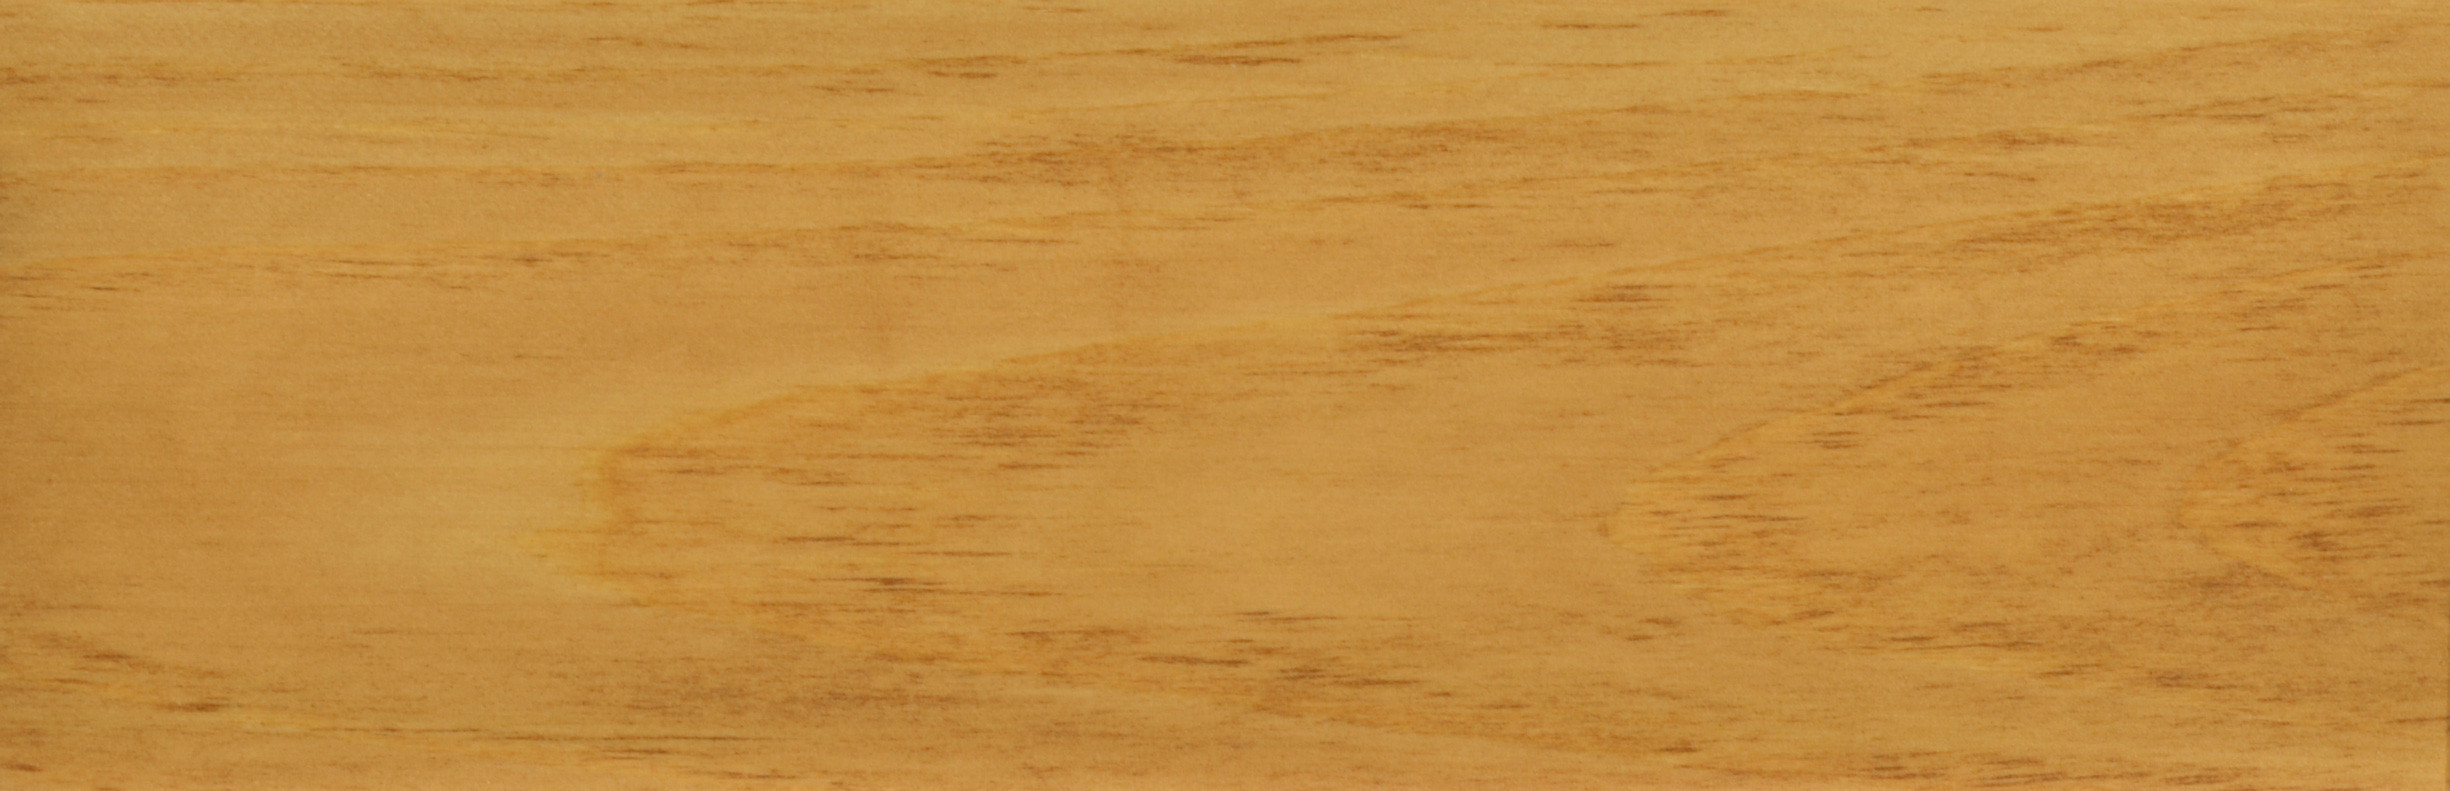 25 Elegant Hardwood Flooring Clearance Ontario 2024 free download hardwood flooring clearance ontario of deck oil oil for outdoor use vermeister regarding deck oil oil for outdoor use amber